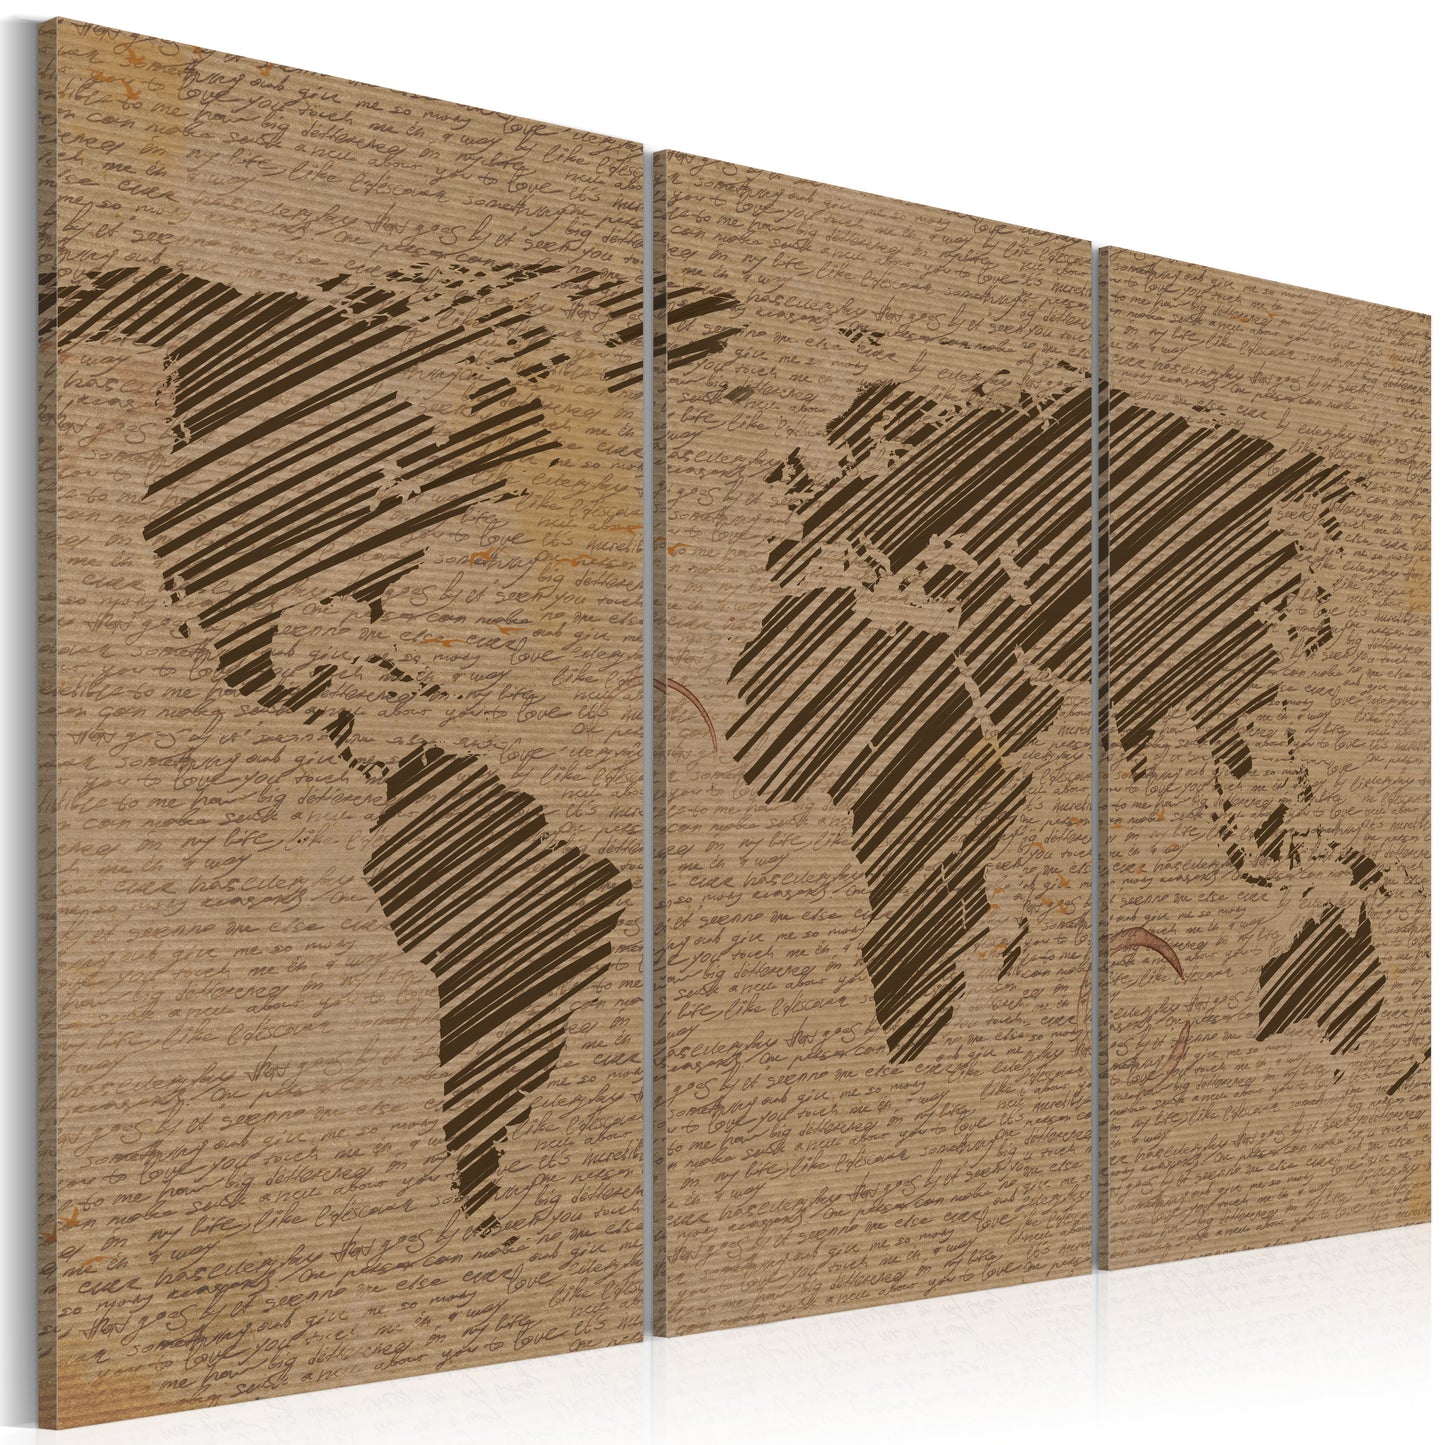 Weltkarte als Leinwandbild - Wandbild - Notizen aus der Welt - Triptychon